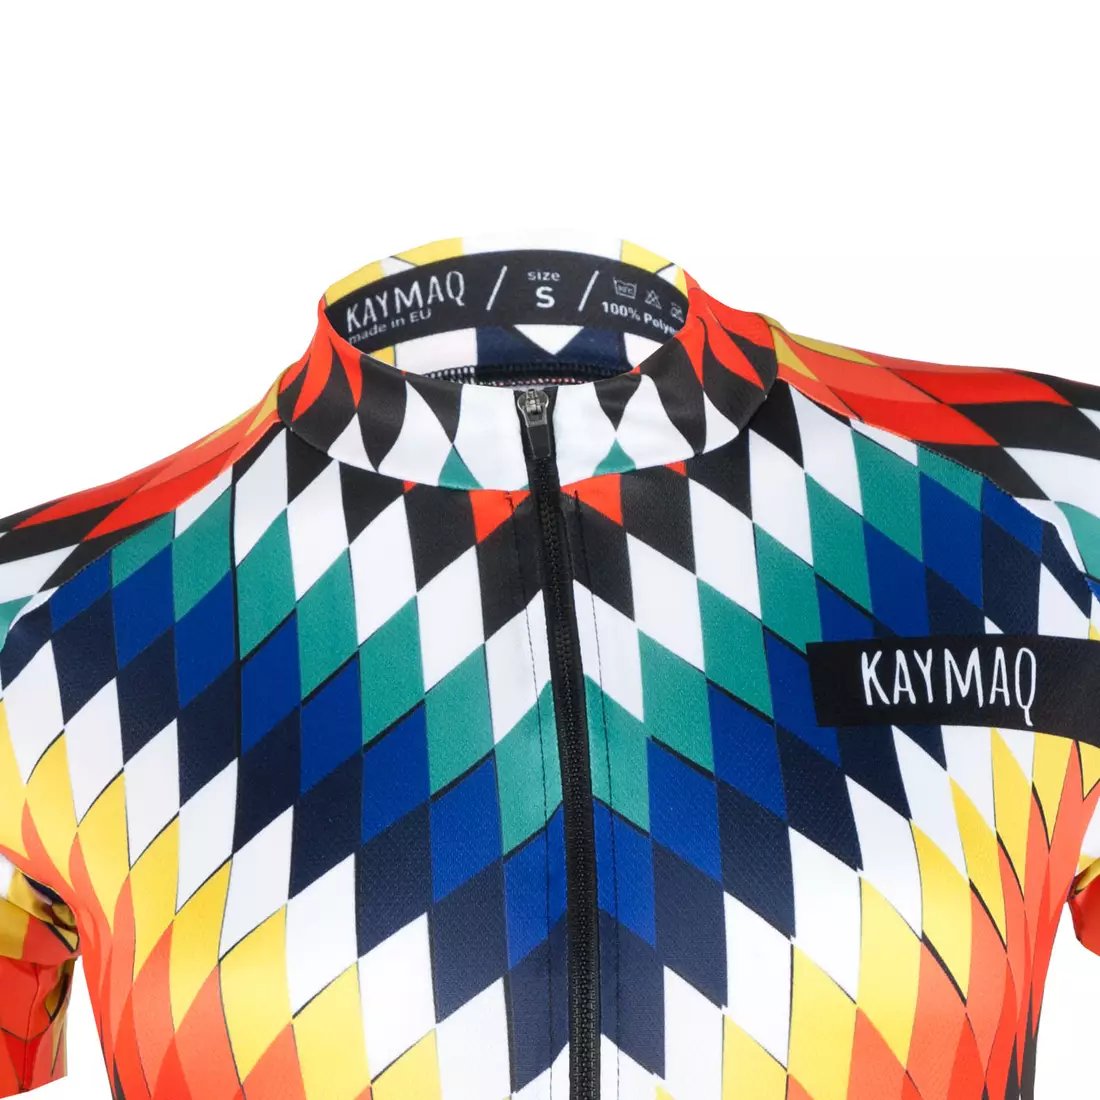 KAYMAQ DESIGN W1-M50 dámský cyklistický dres s krátkým rukávem